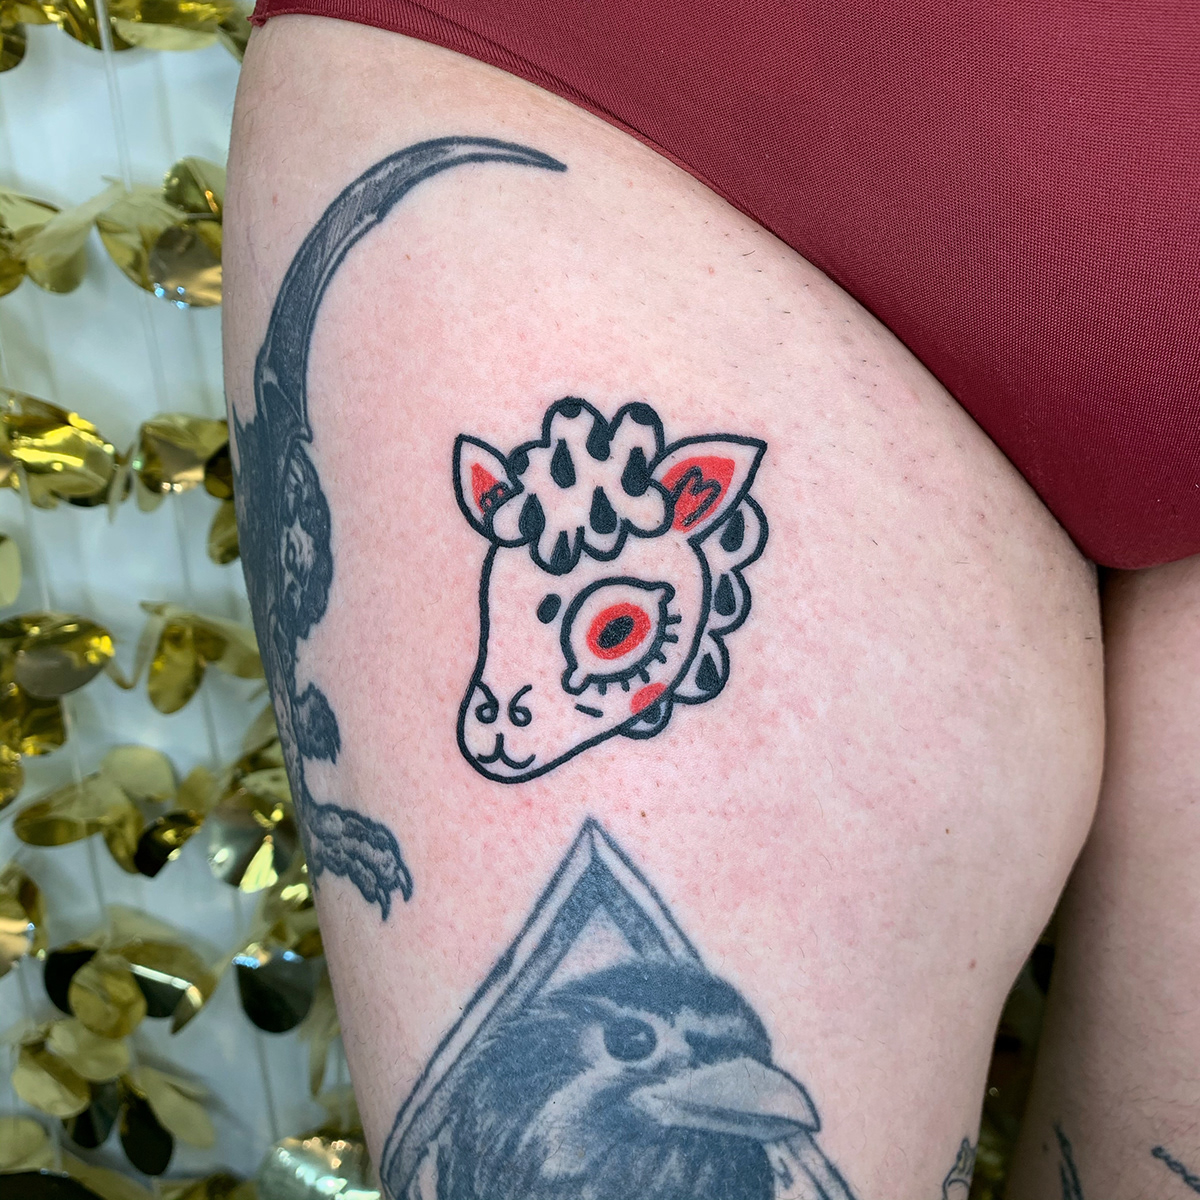 El Salvador Paris tattoo tattoo flash witch goat demon floral skull